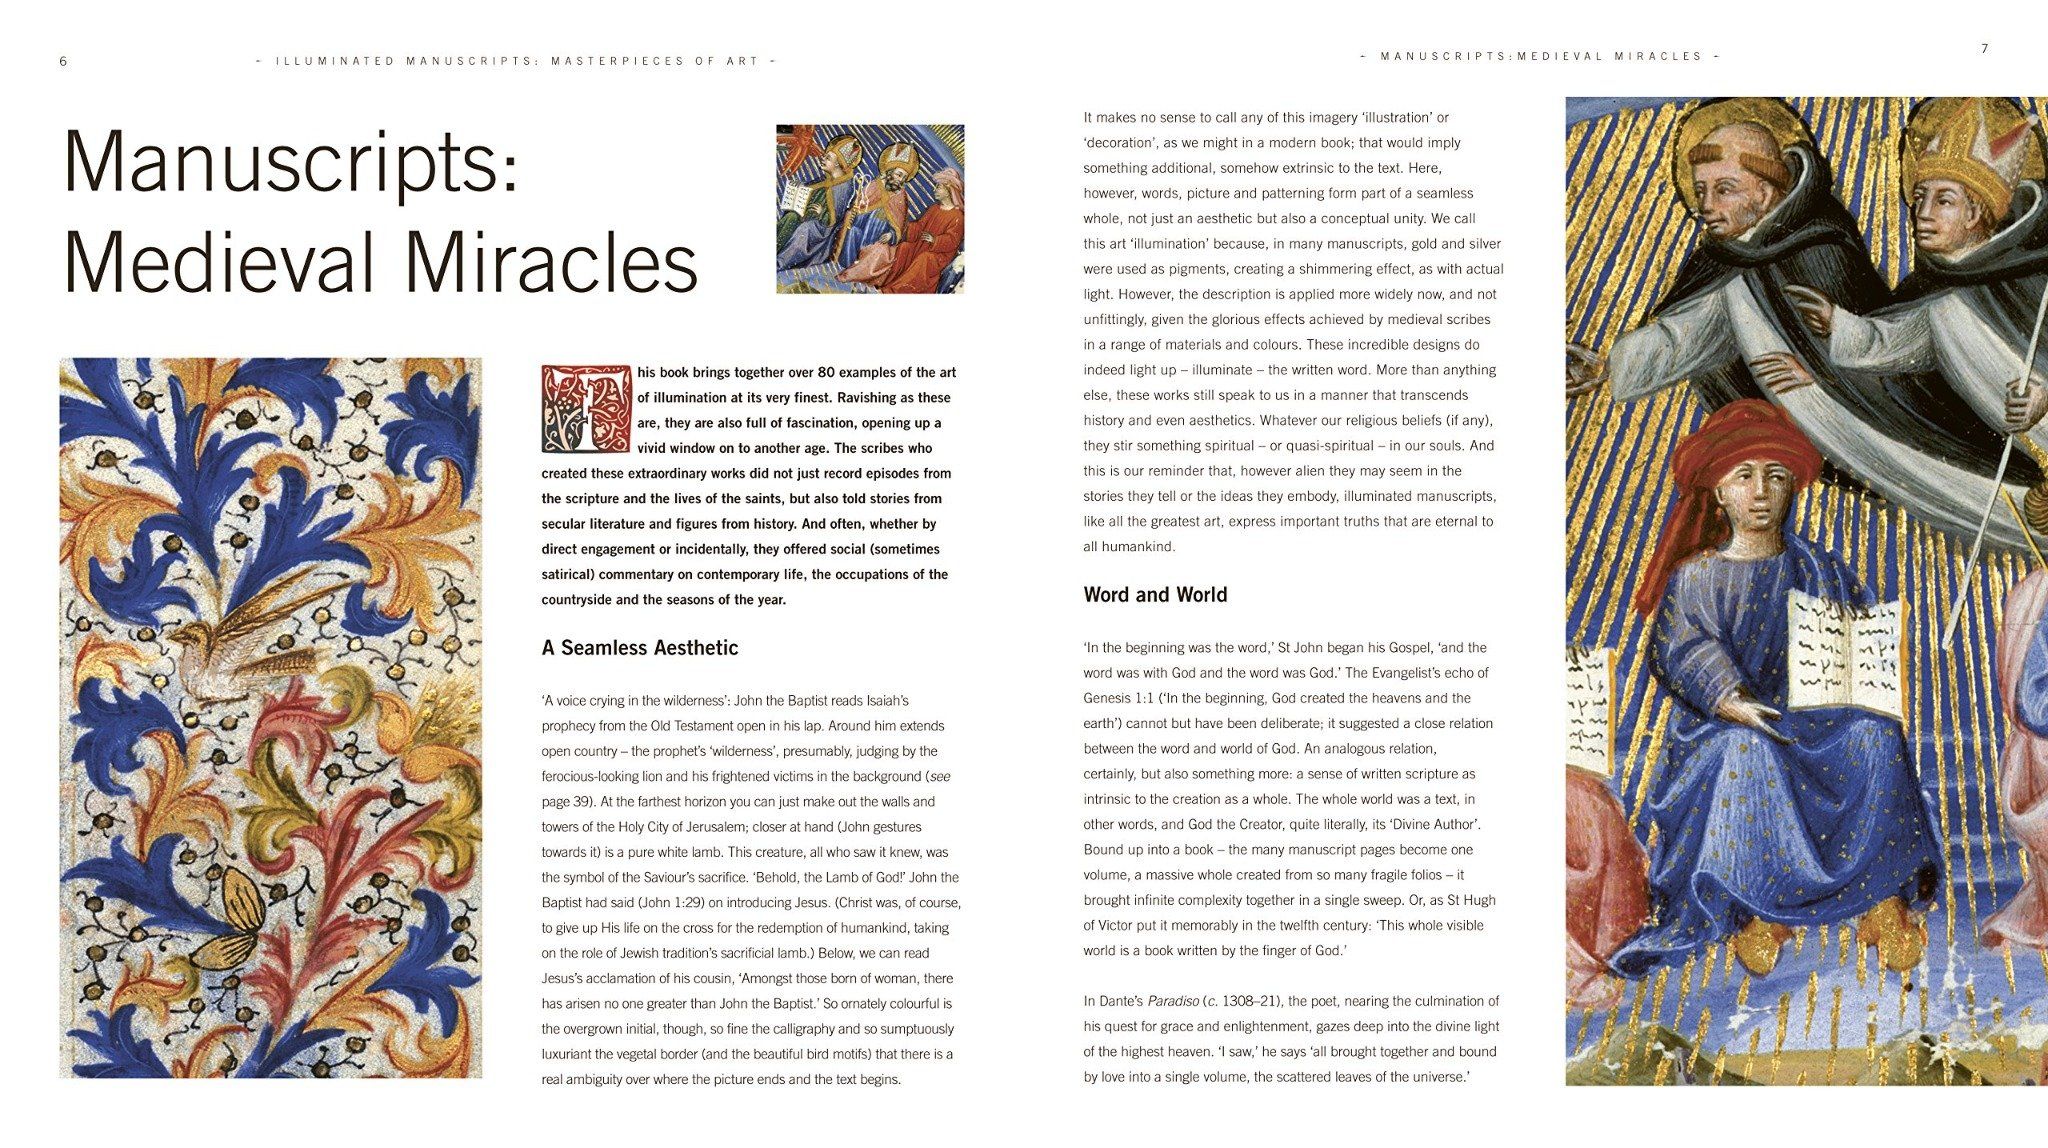  Illuminated Manuscripts Masterpieces of Art_Michael Kerrigan_9781783612116_Flame Tree Publishing 